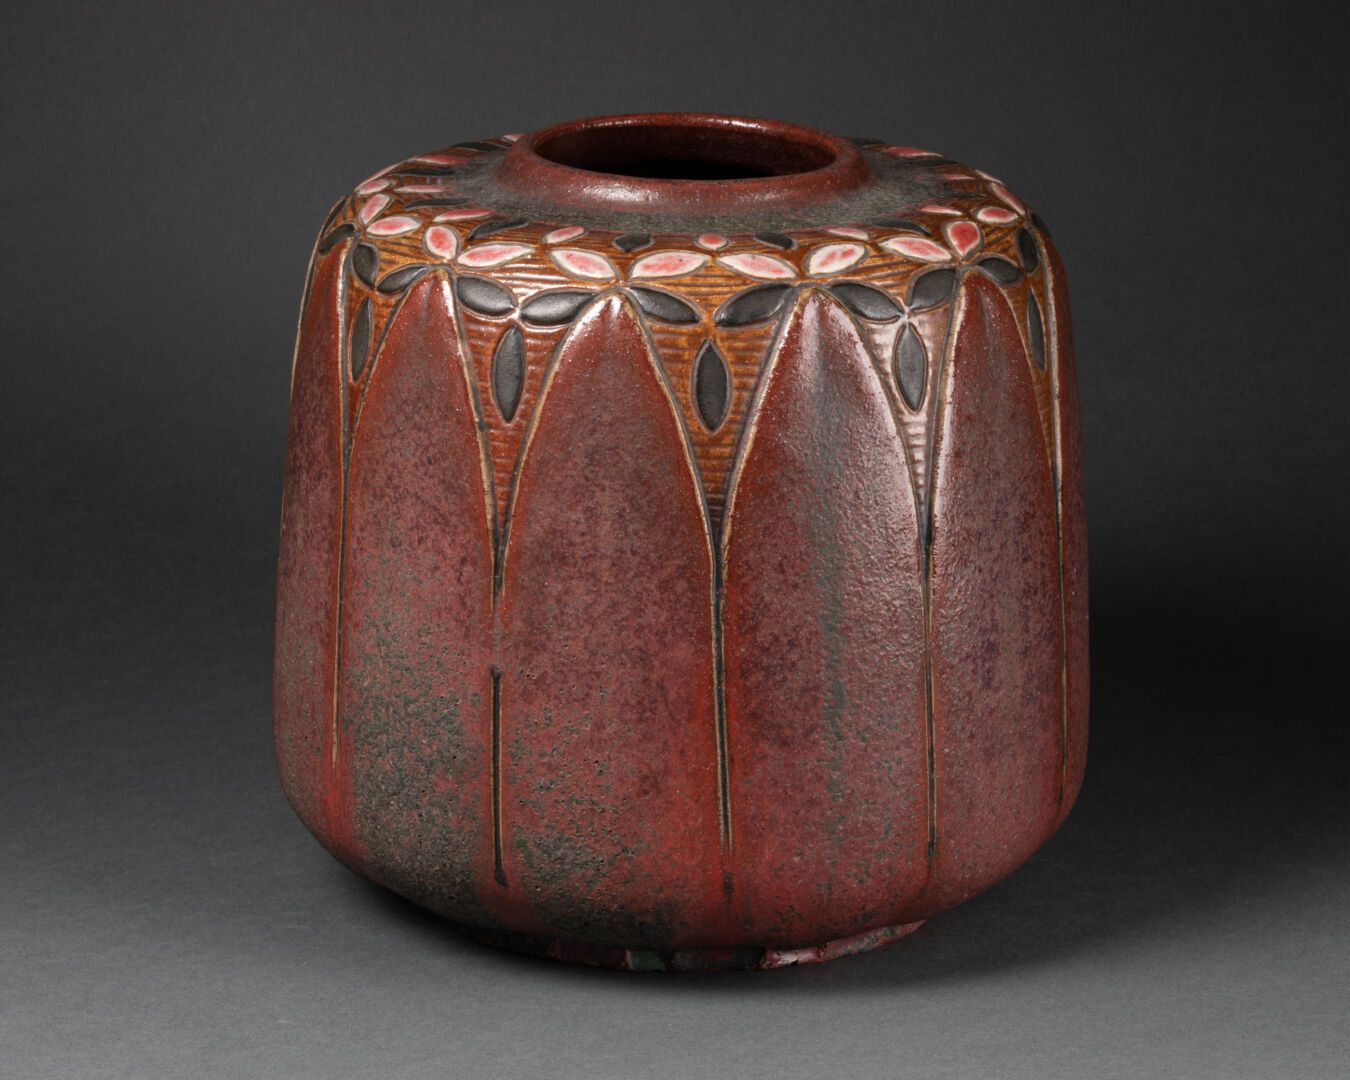 EDMOND LACHENAL (1855-1948) 花瓶，带风格化的花卉装饰

棕色釉面陶瓷

H.20厘米

底部有Lachenal的签名